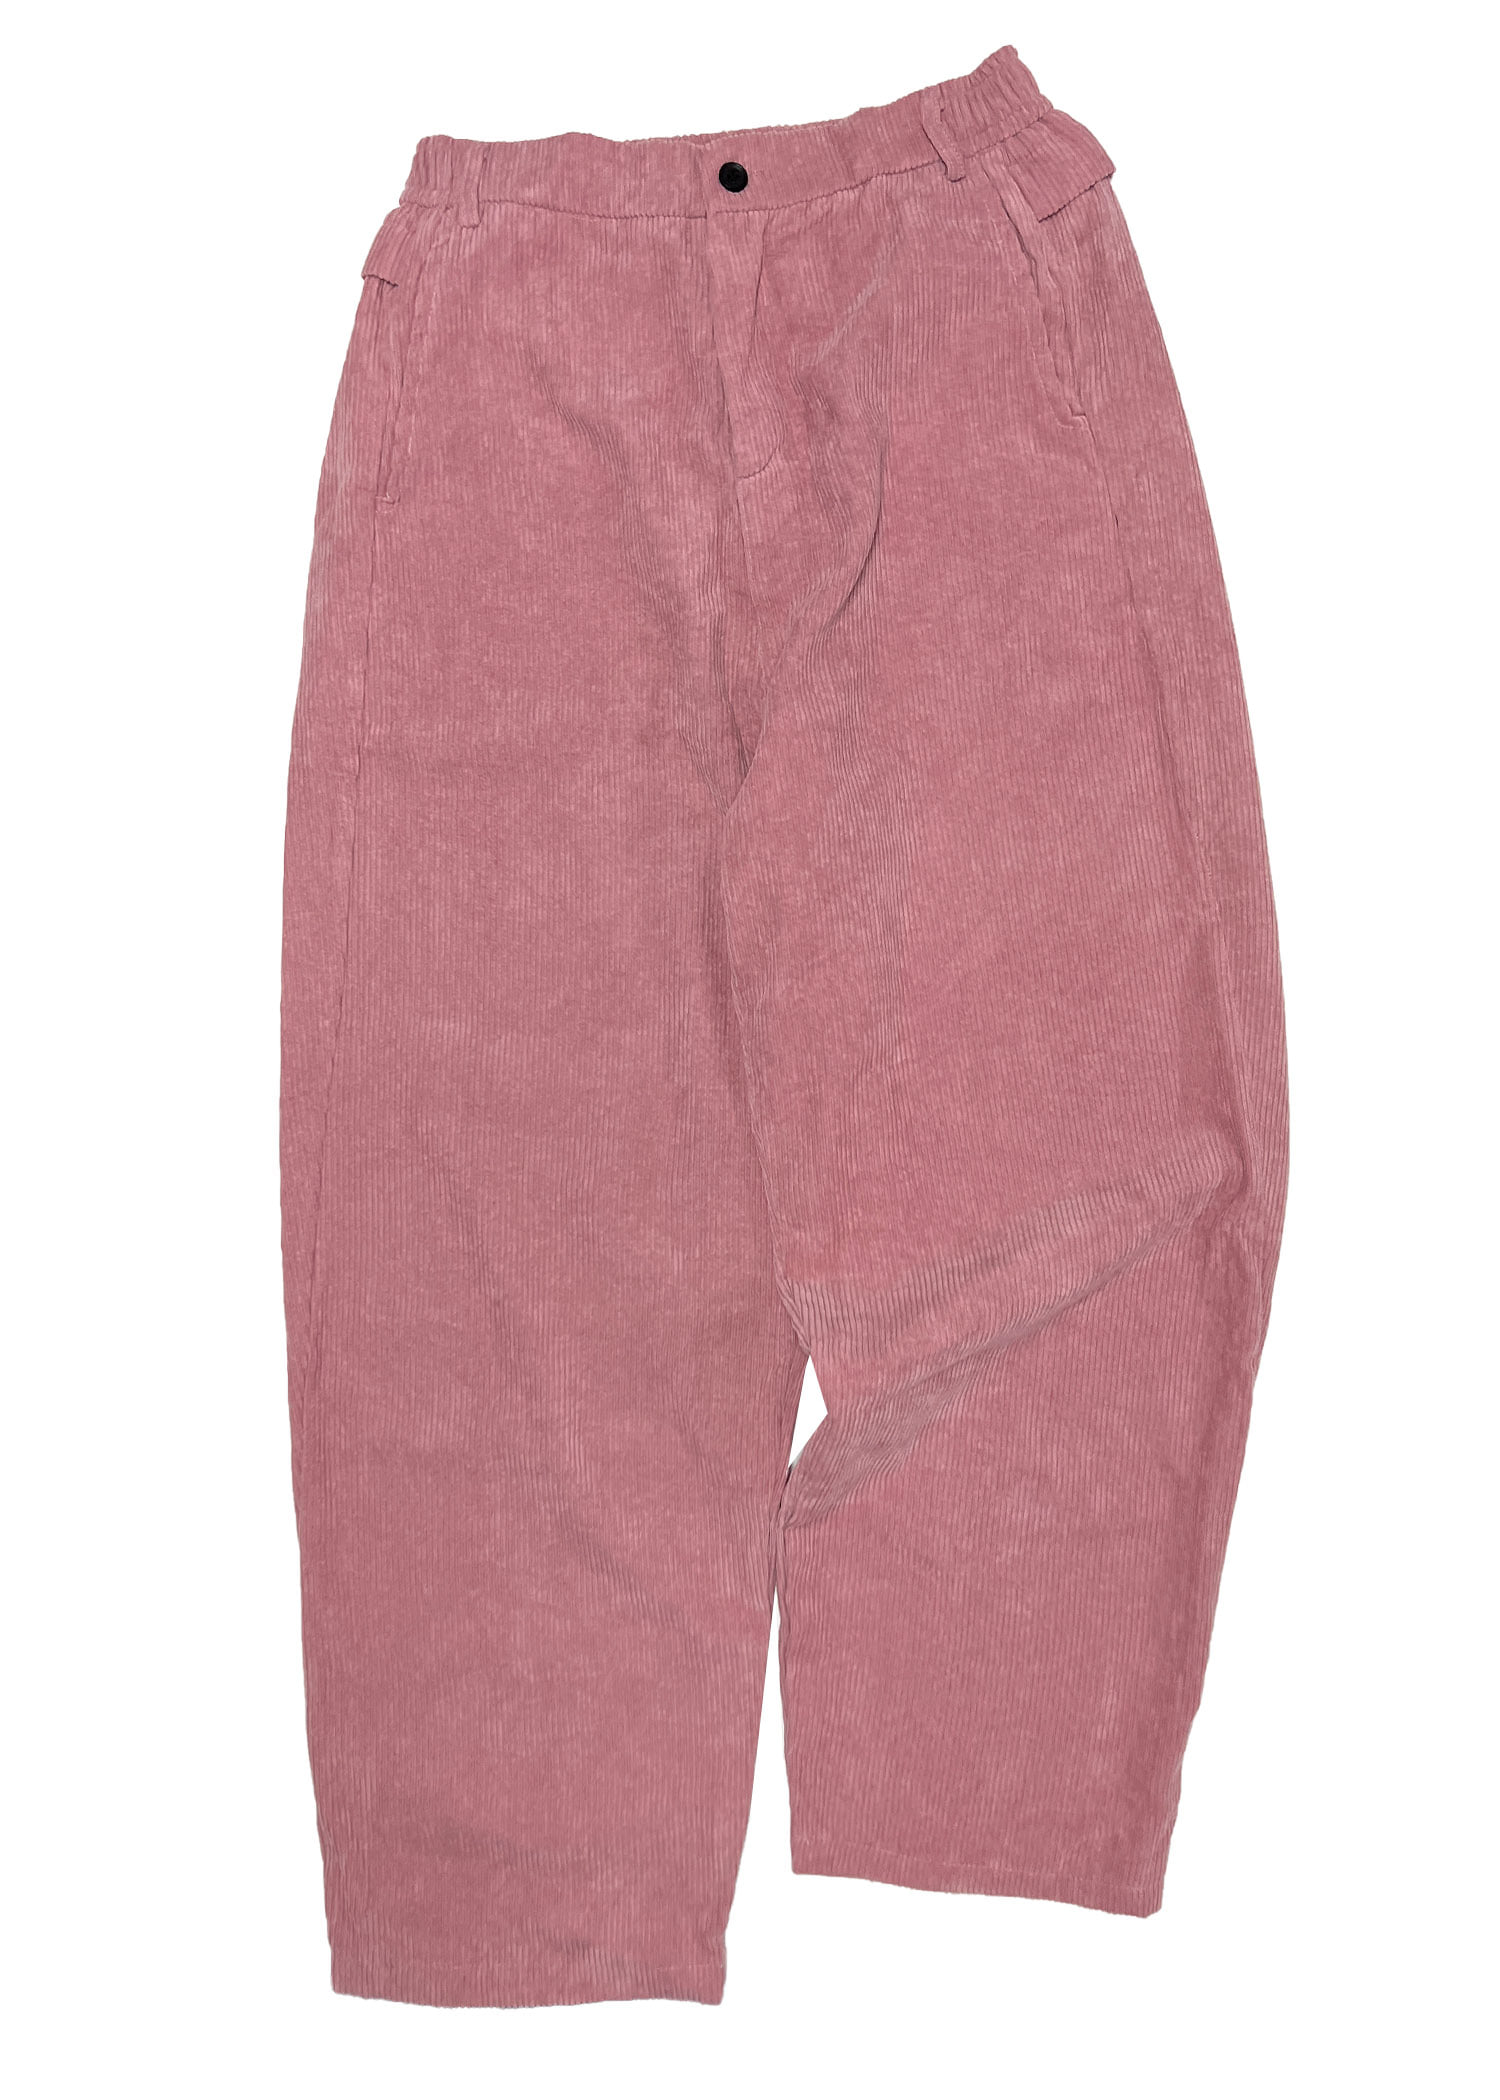 select vintage : pink corduroy pants